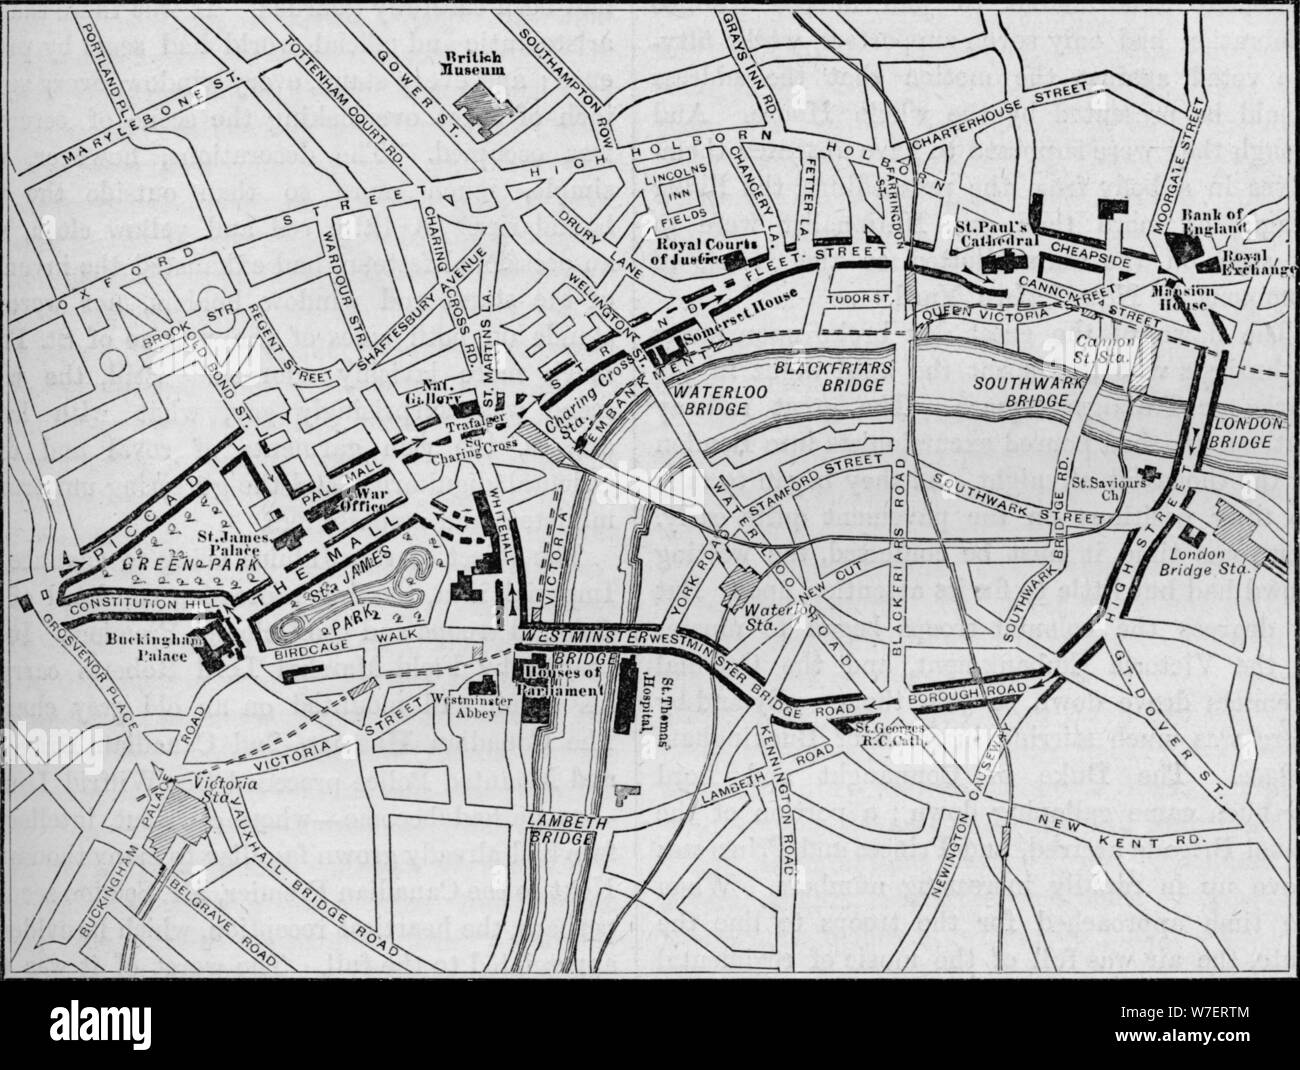 London Street Map 19th Century Stock Photos London Street Map